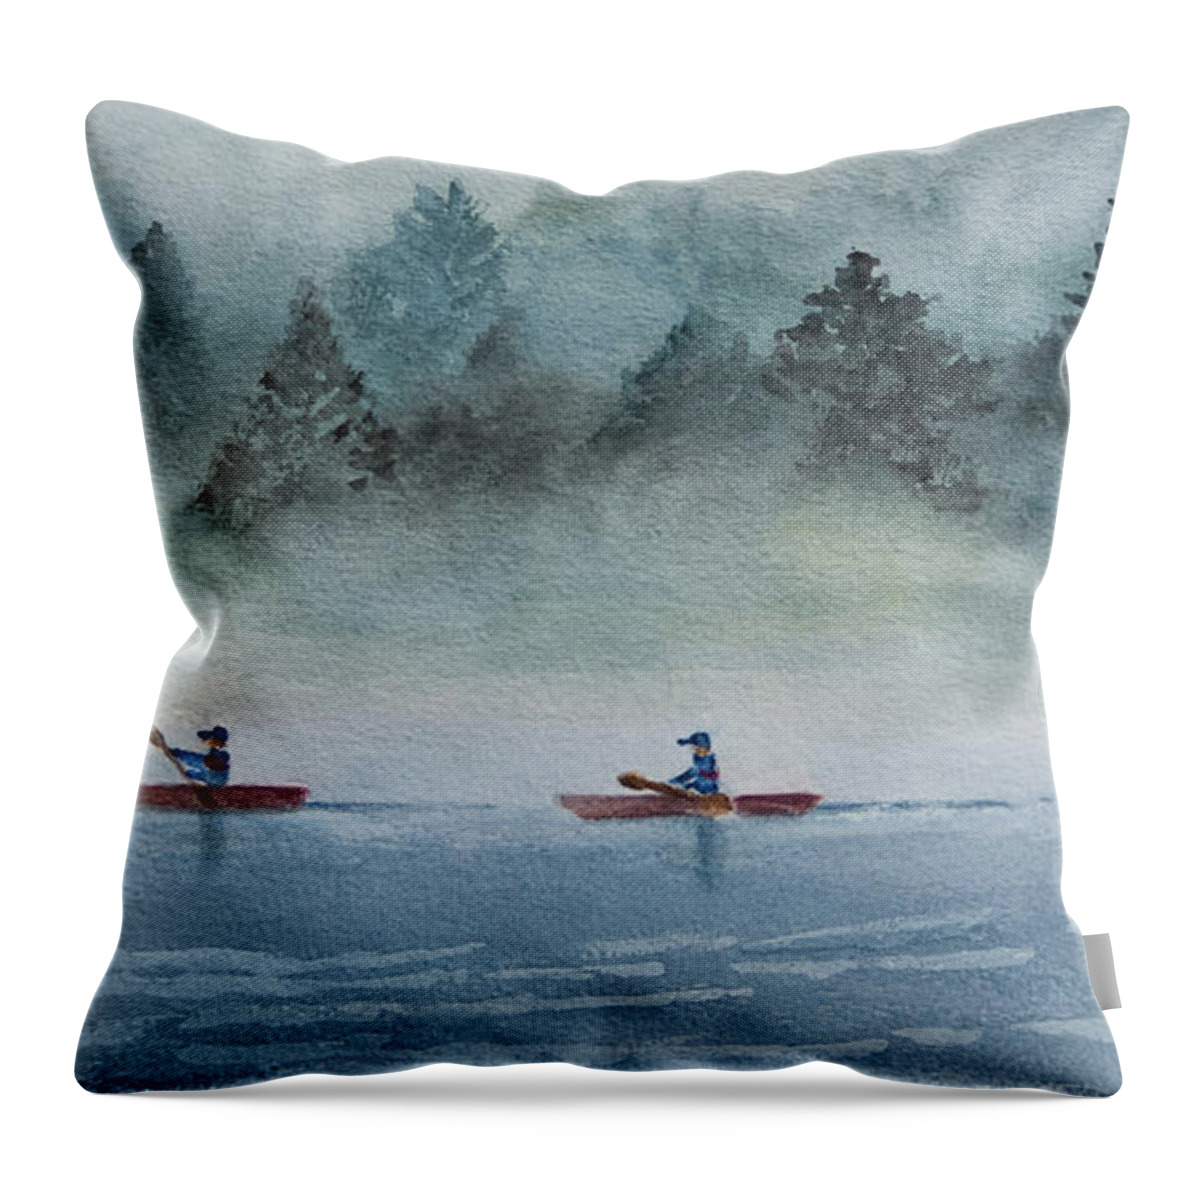 Kyack Throw Pillow featuring the painting Misty Morning by Karen Fleschler